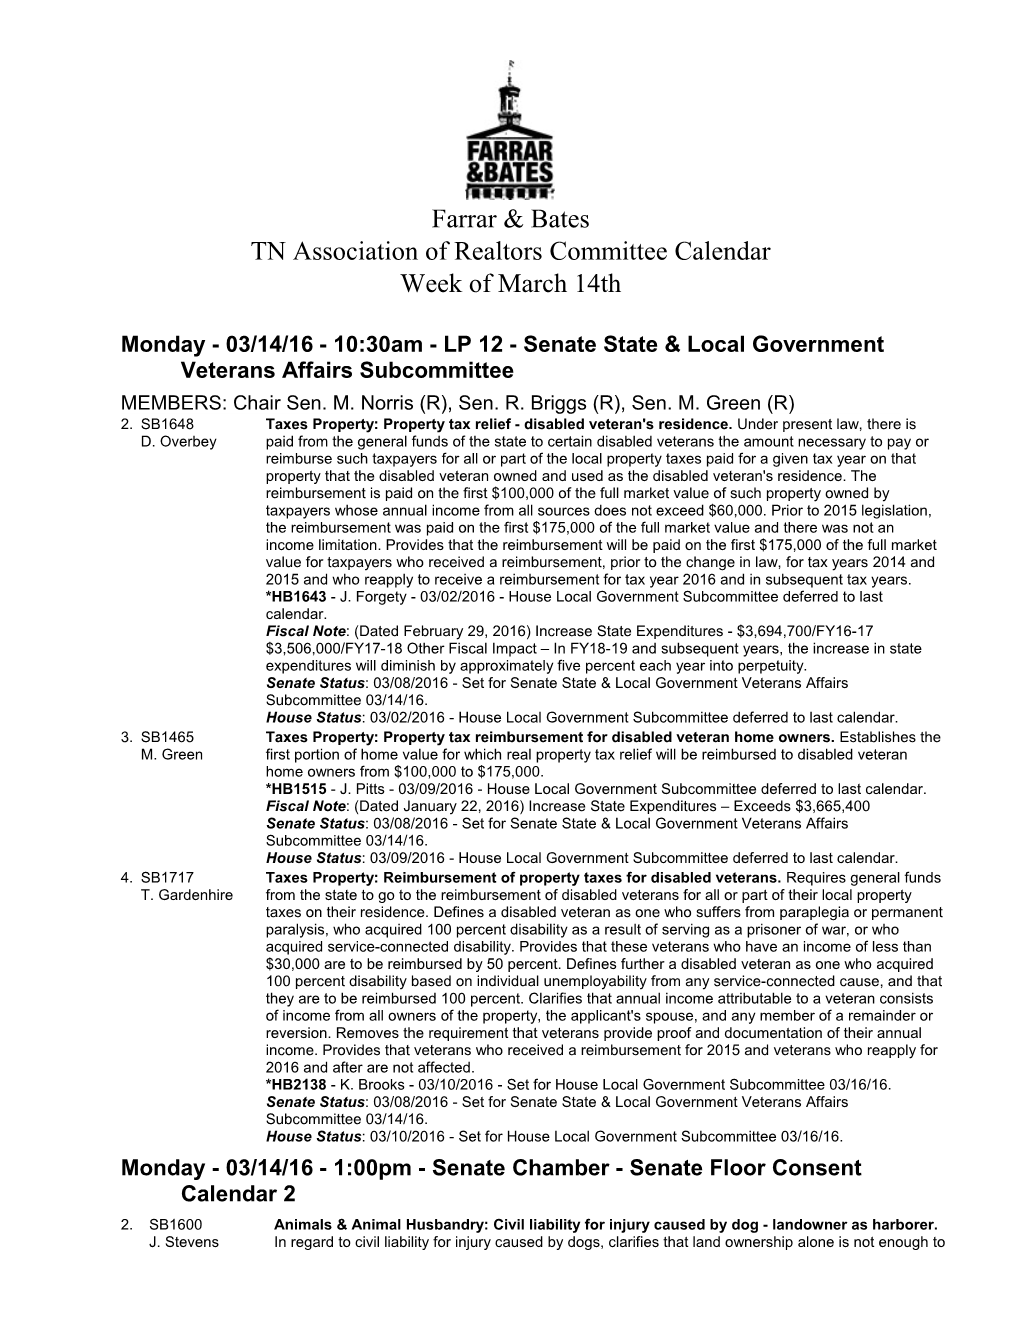 Monday - 03/14/16 - 10:30Am - LP 12 - Senate State & Local Government Veterans Affairs